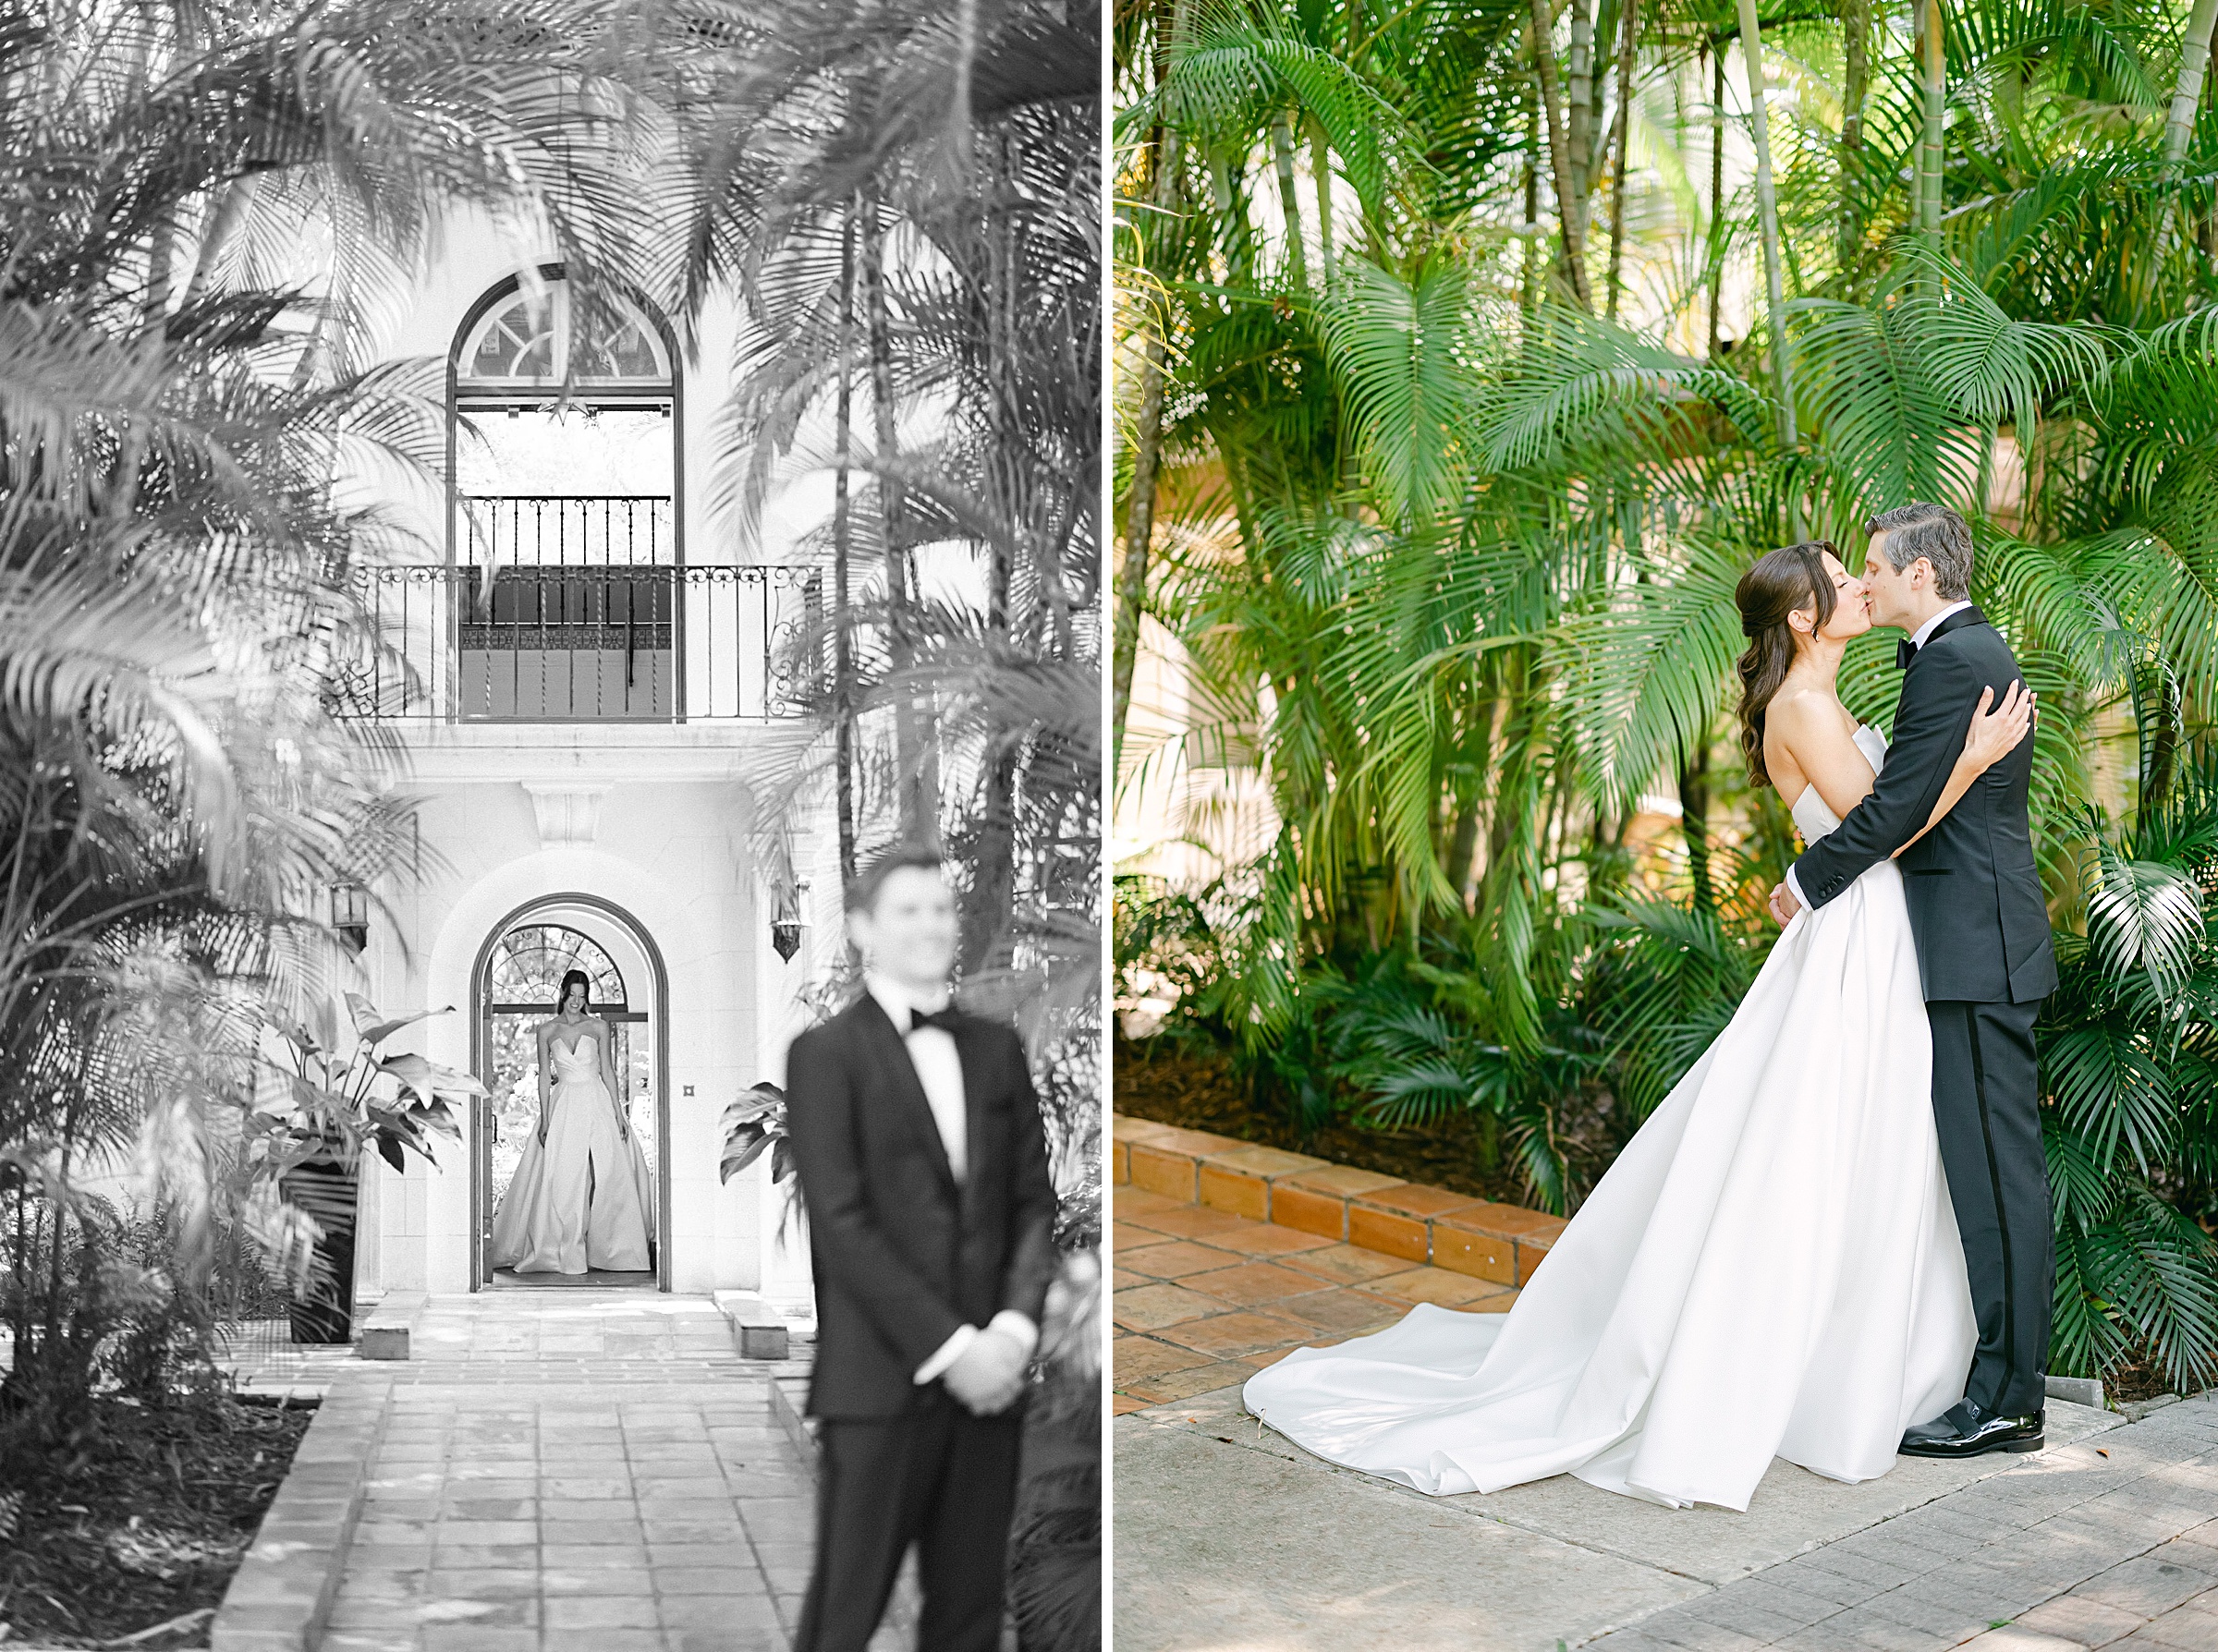 First look between bride and groom at Villa Woodbine